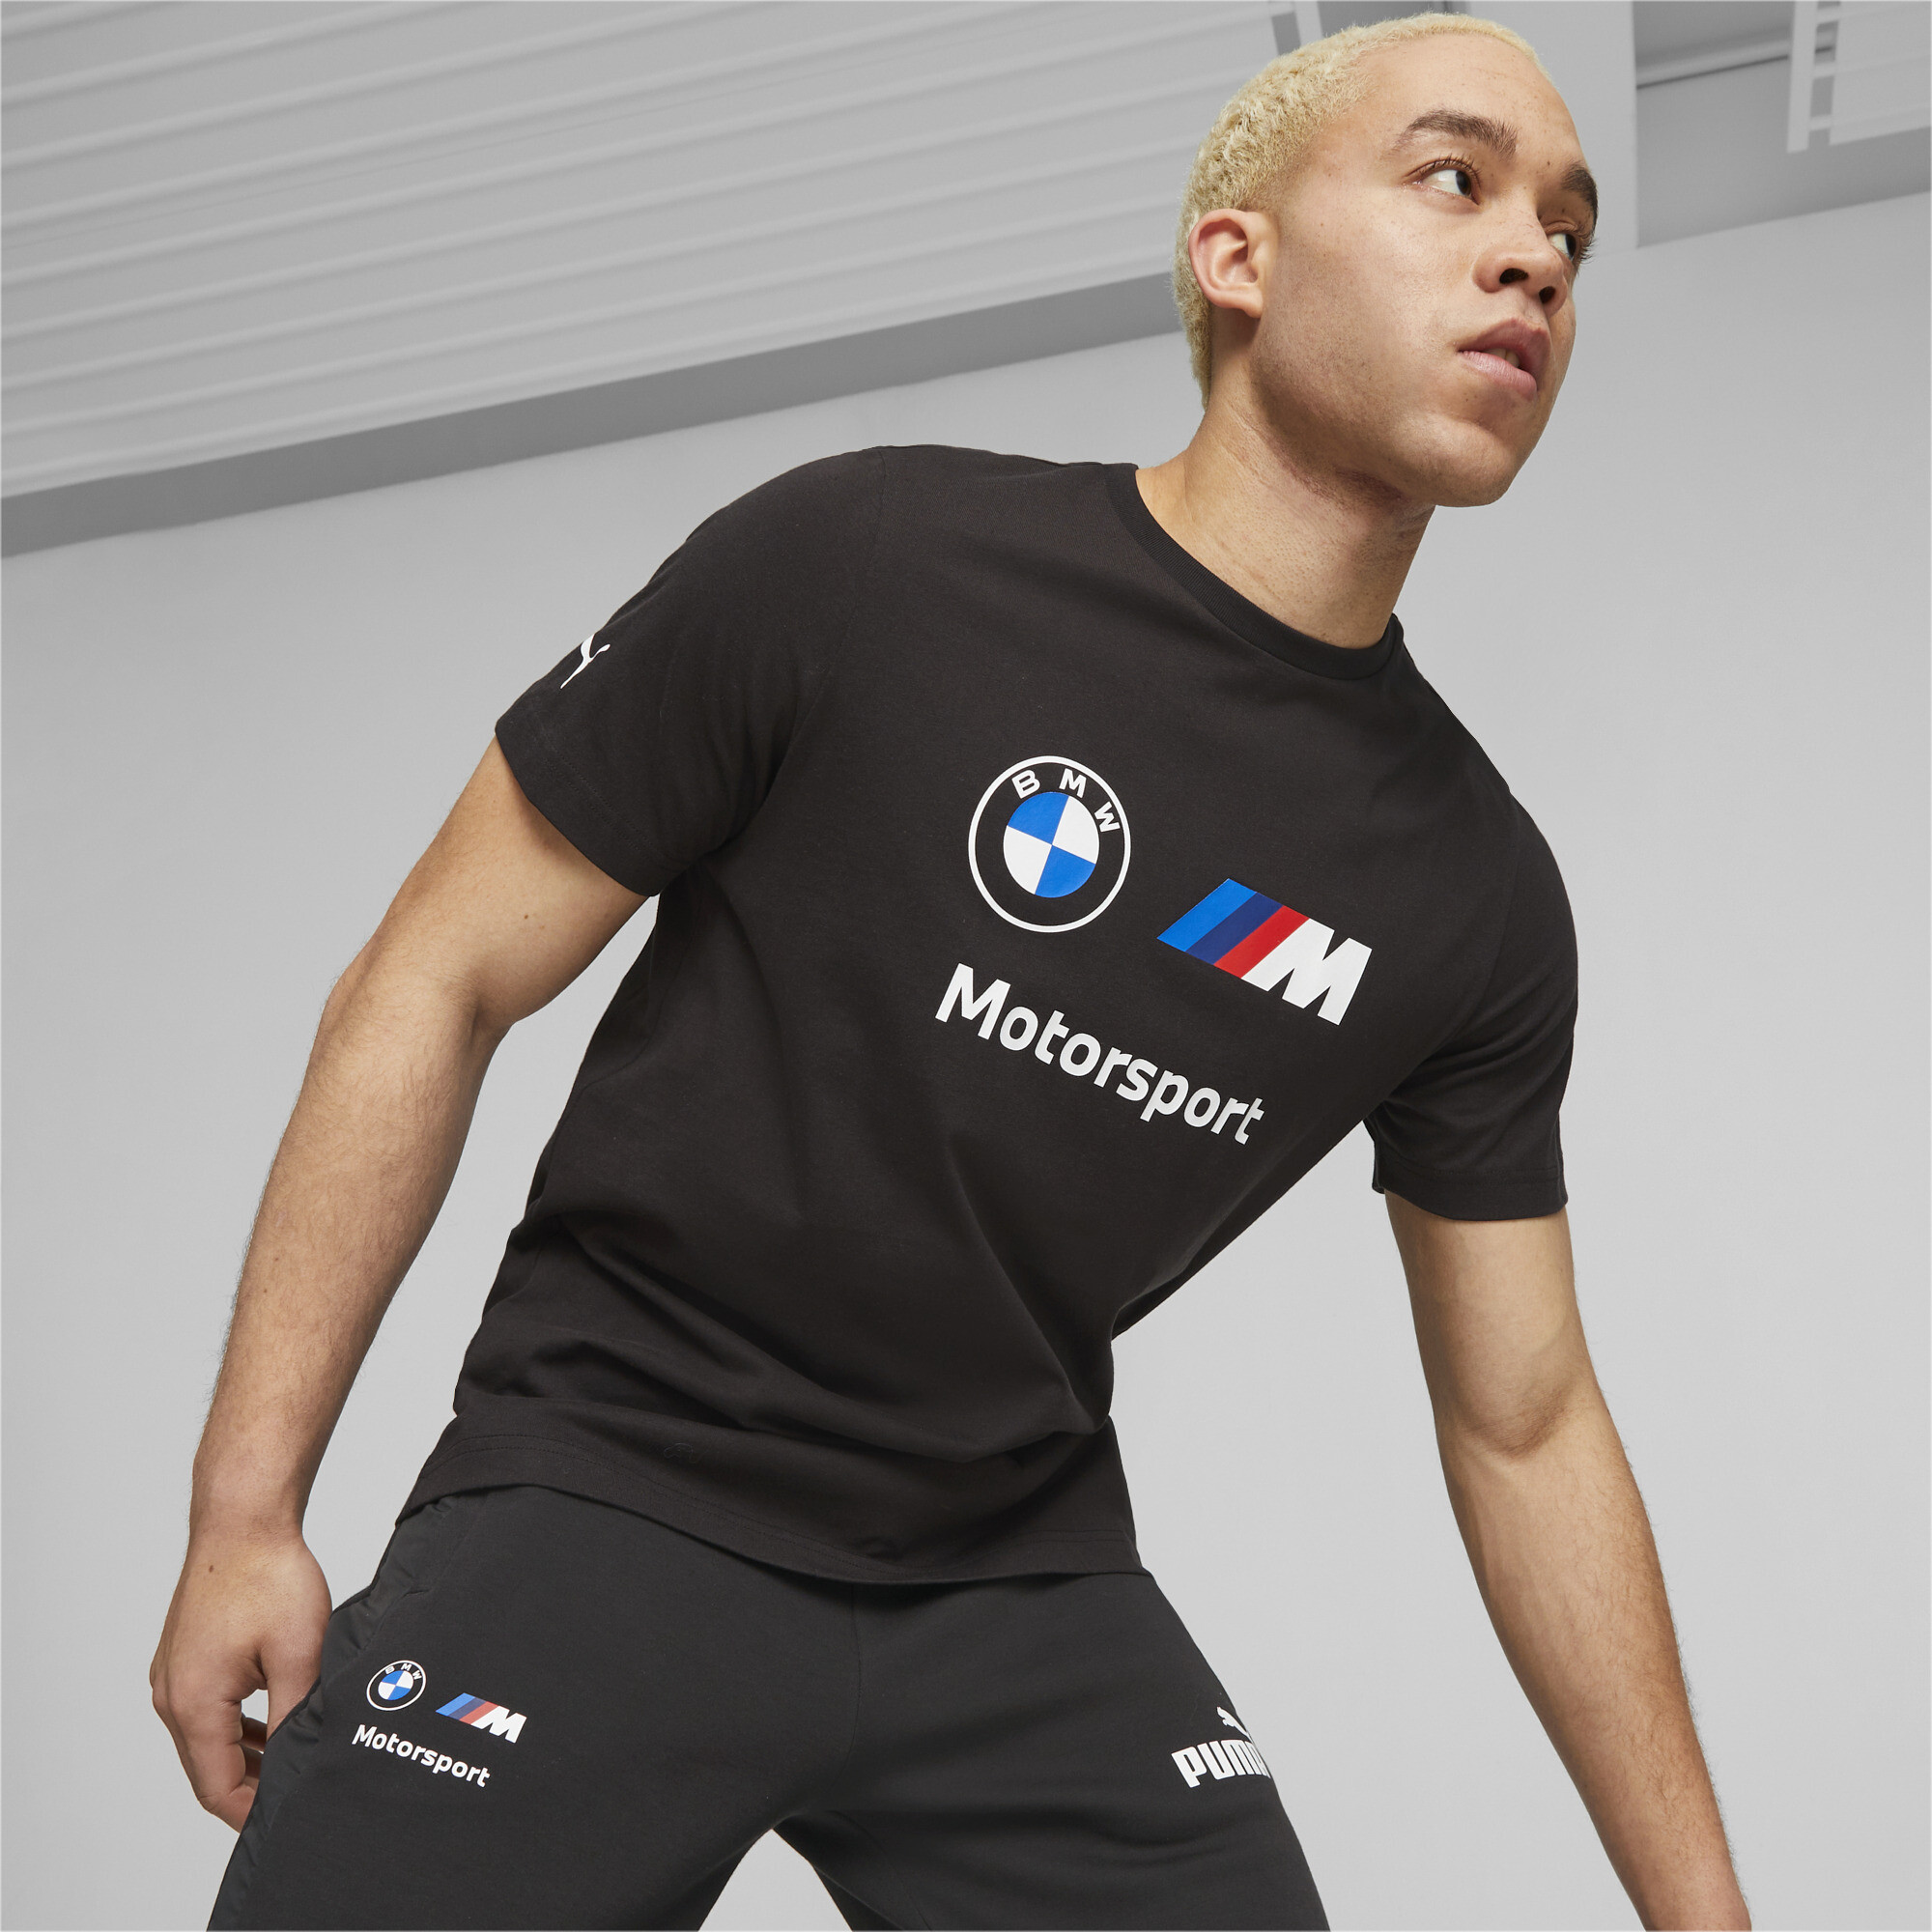 Camiseta BMW M Motorsport Puma ESS Logo - Hombre - Verde – FANABOX™